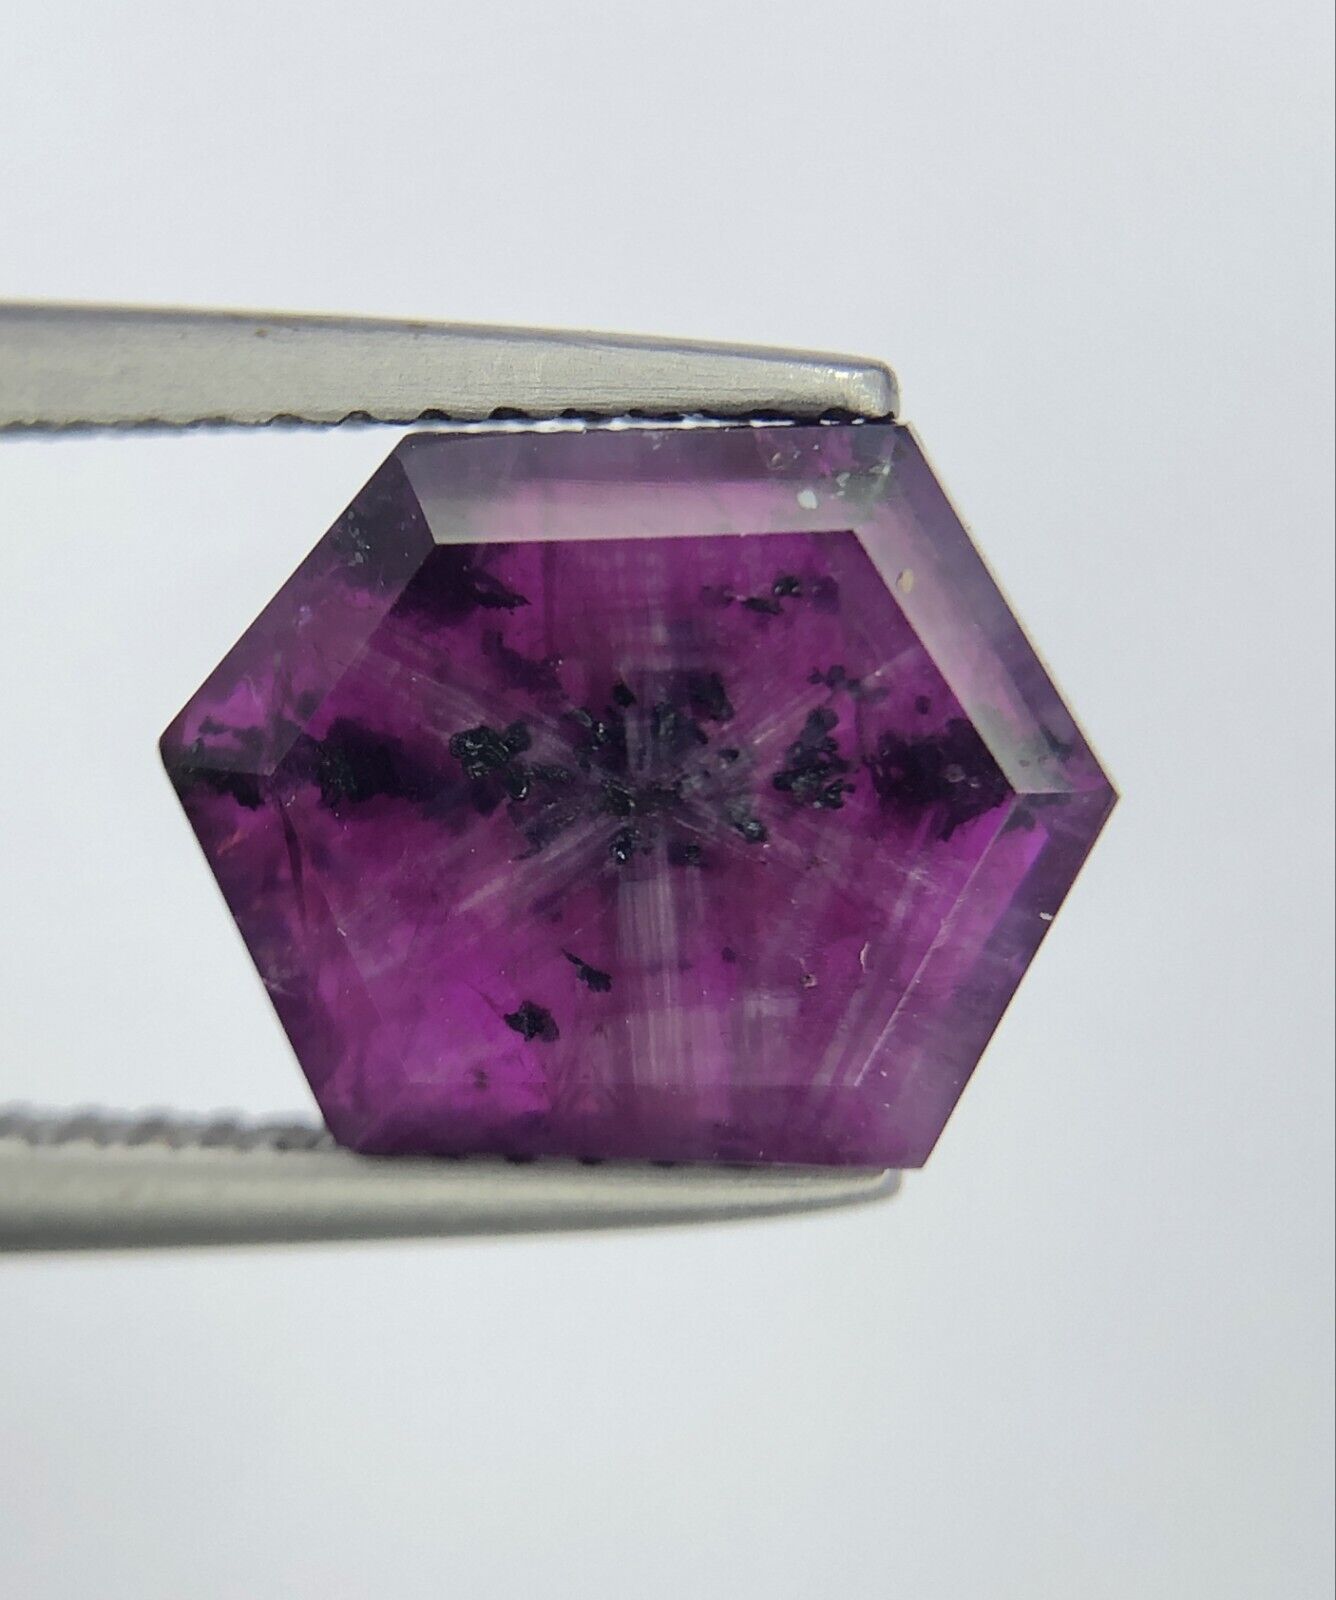 4.40 Carat. Ruby Trapiche Corundum Star Polished Crystal from Kashmir Pakistan